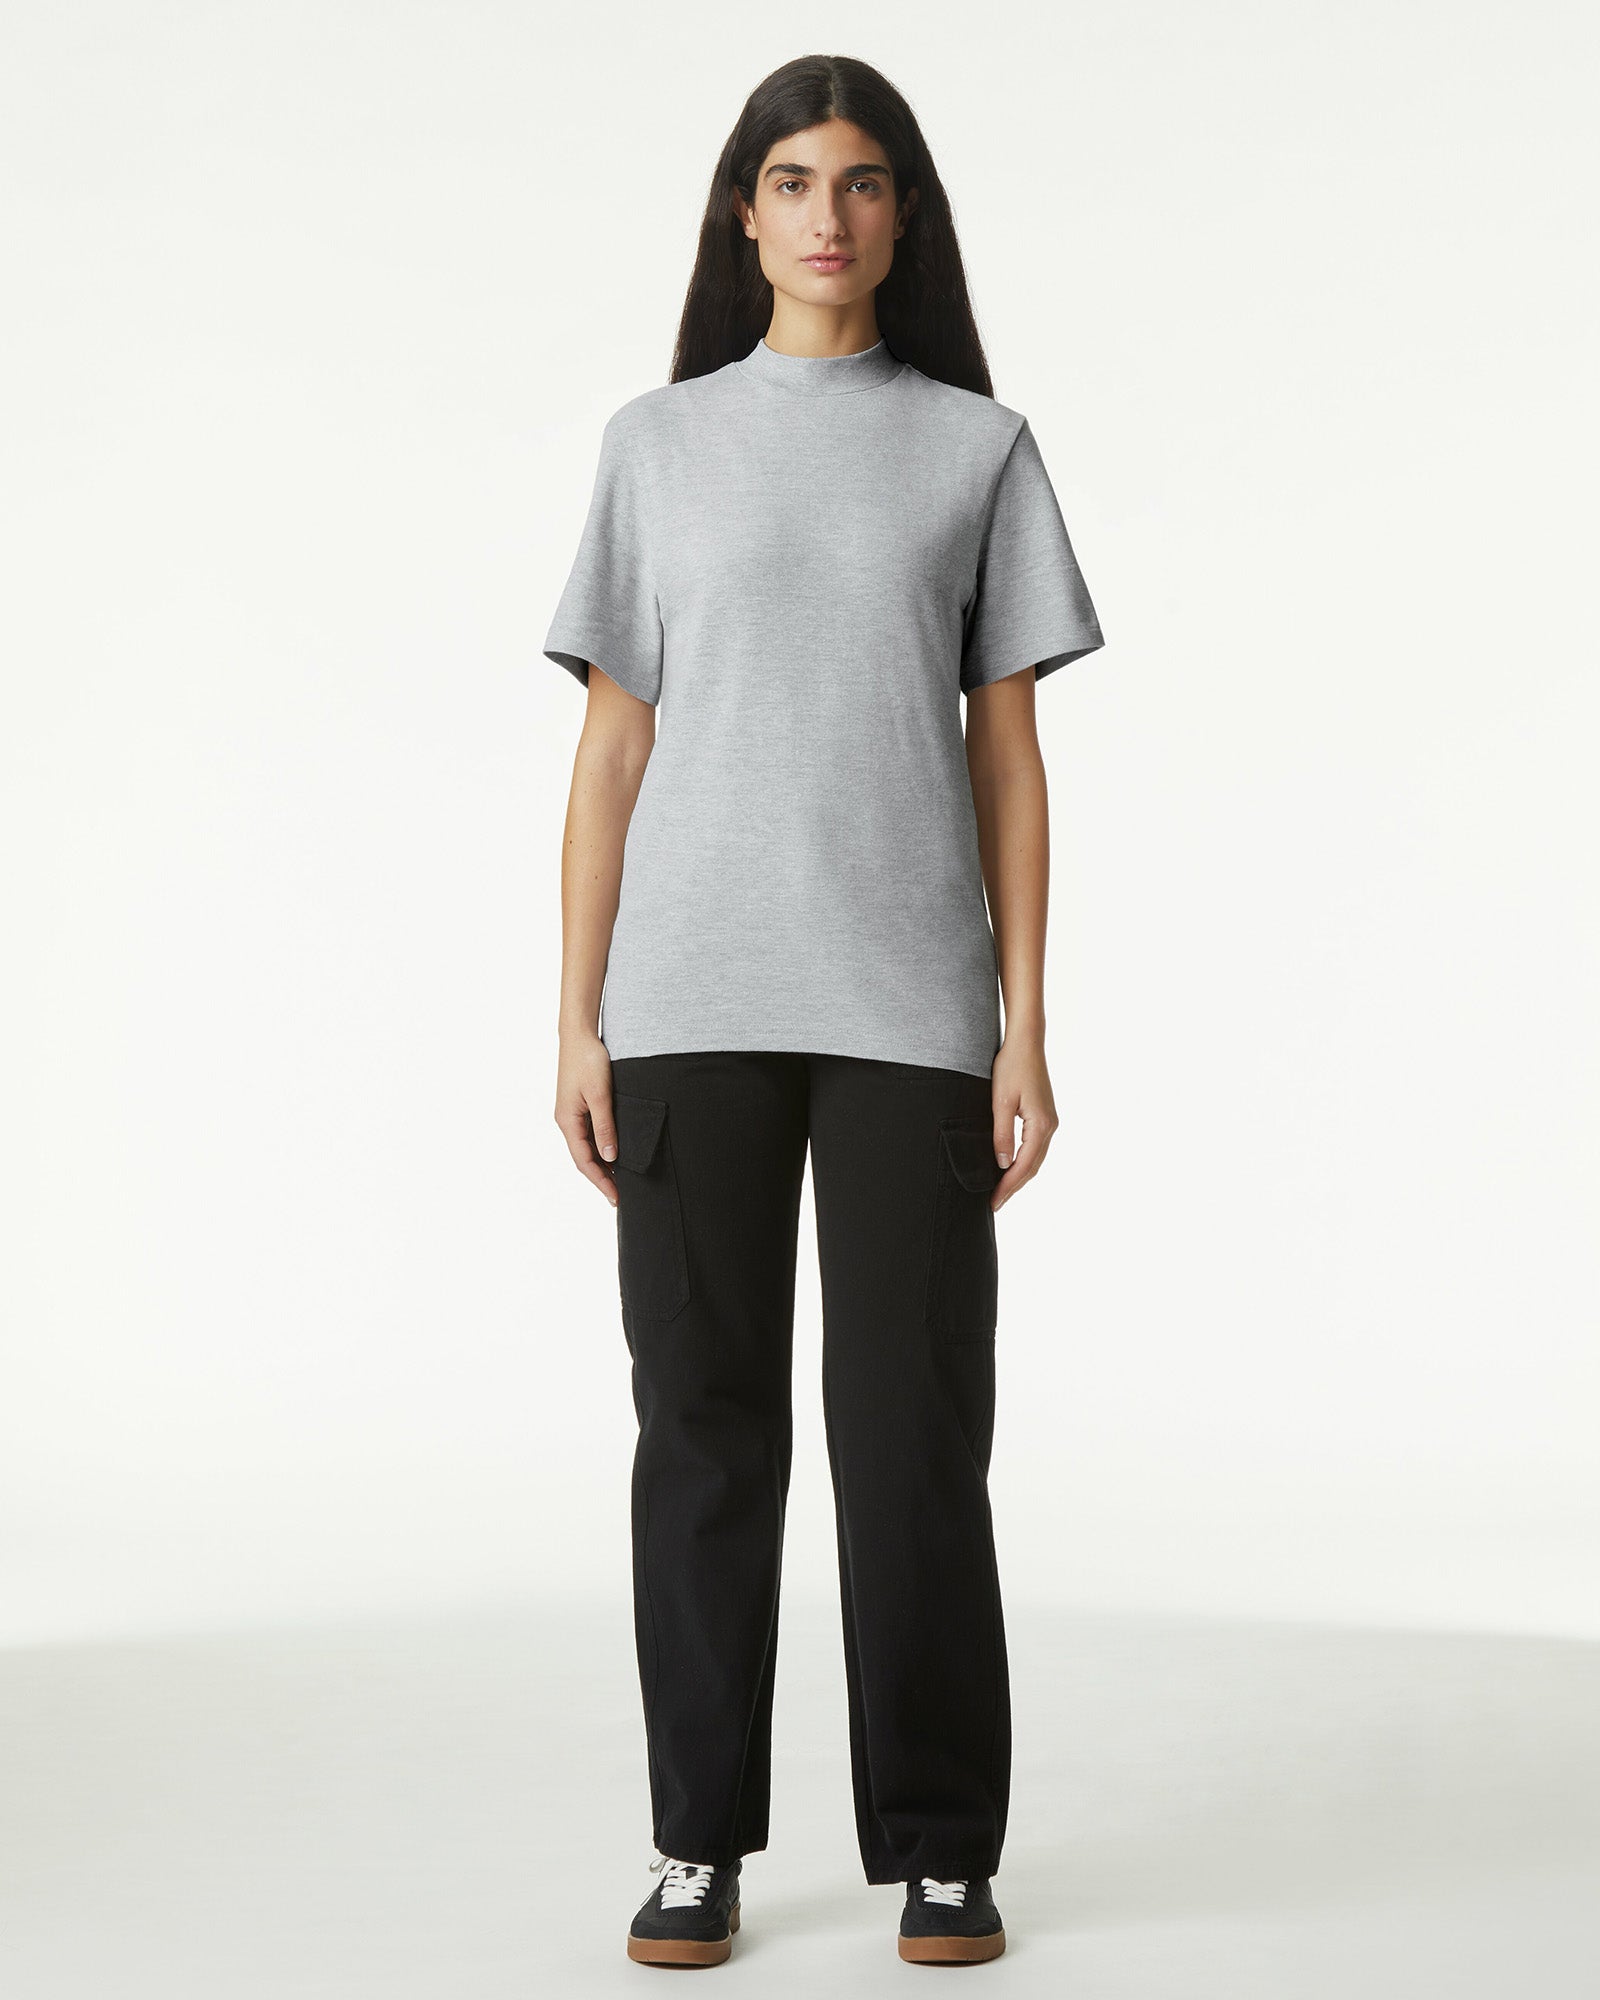 Pique Unisex Mockneck T-shirt - Heather Grey